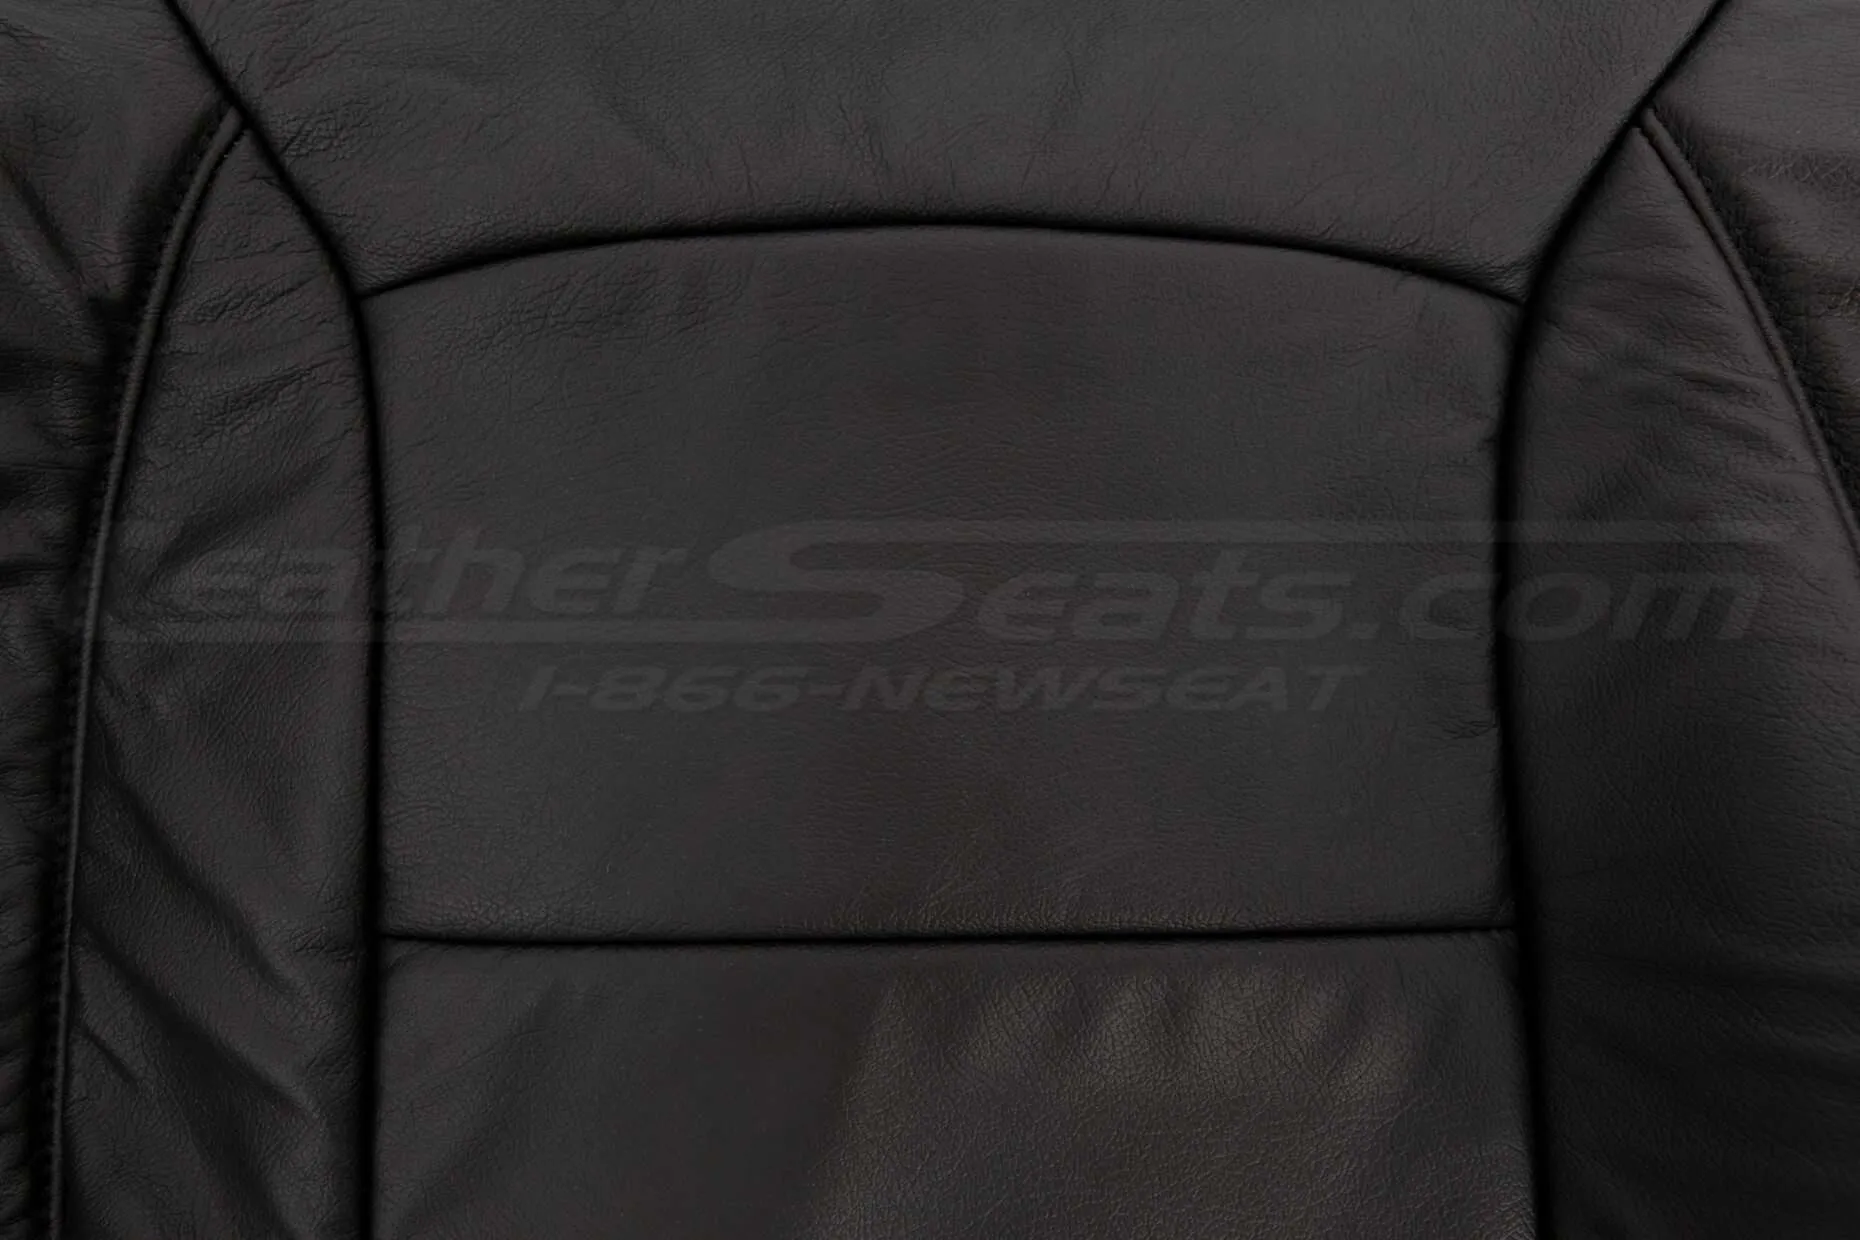 16-20 Chevrolet Malibu Upholstery Kit - Black - Insert close-up